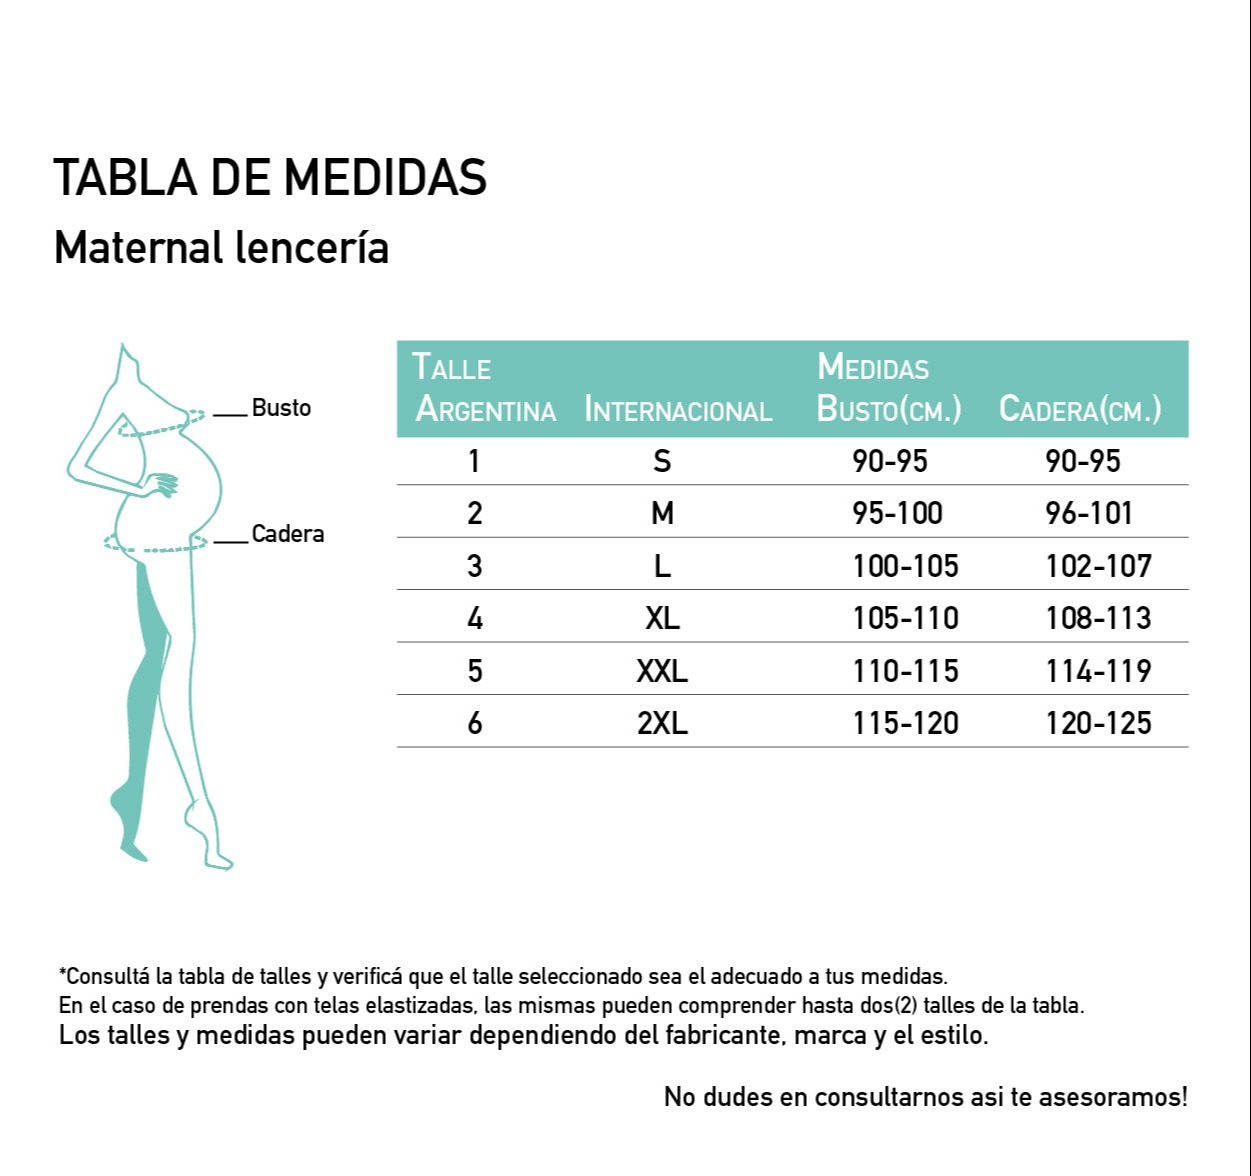 Calza Maternal VALE Tabla de medidas